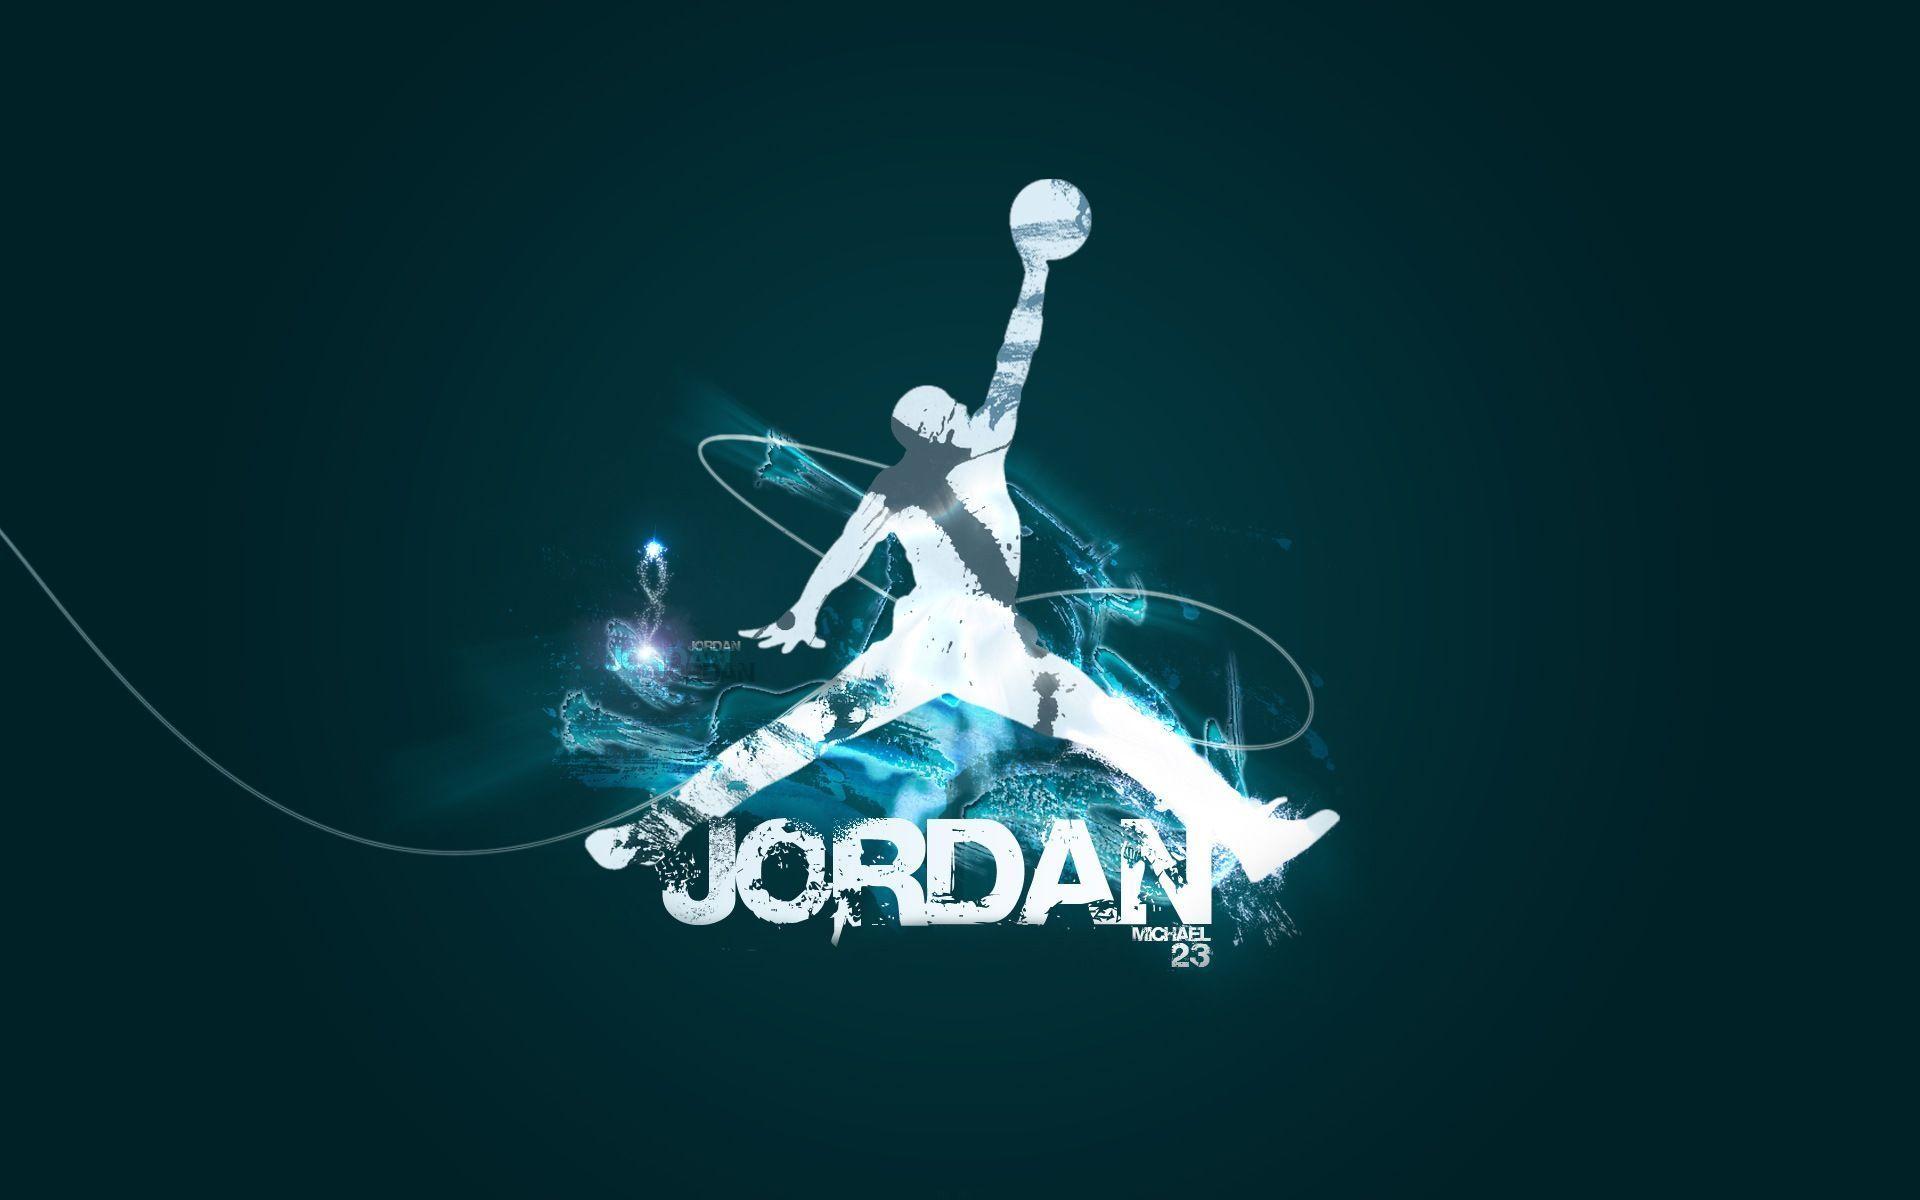 The Coolest Jordan Logo - Nike Air Jordan Wallpaper and Iconic Images for Desktops